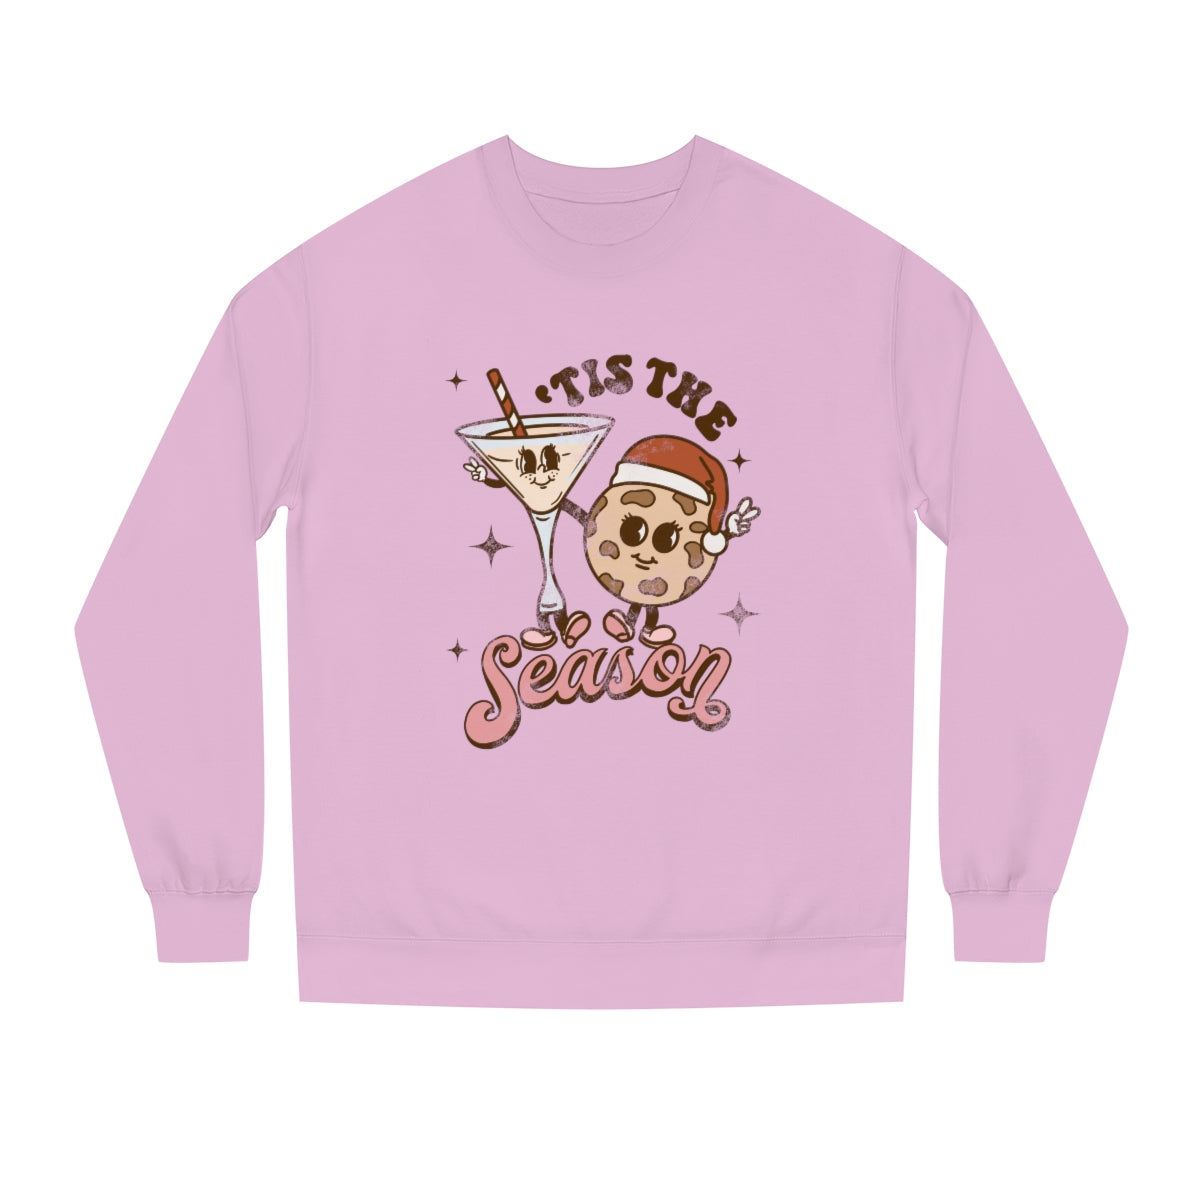 Tis The Season Pink Crewneck Sweatshirt